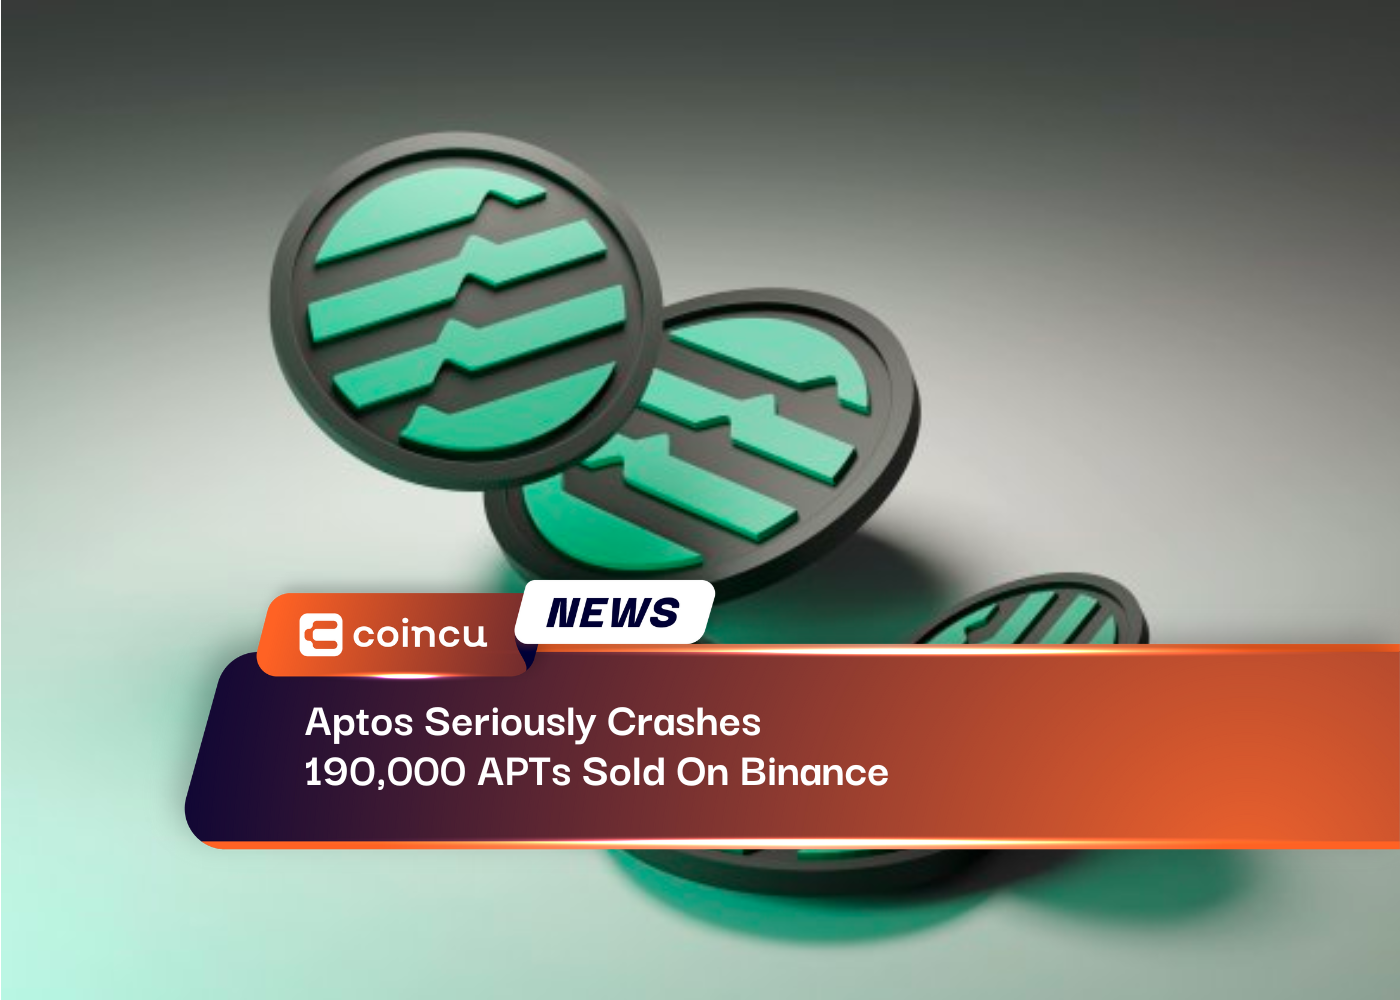 Aptos는 바이낸스에서 판매된 190,000개의 APT를 심각하게 충돌시켰습니다.